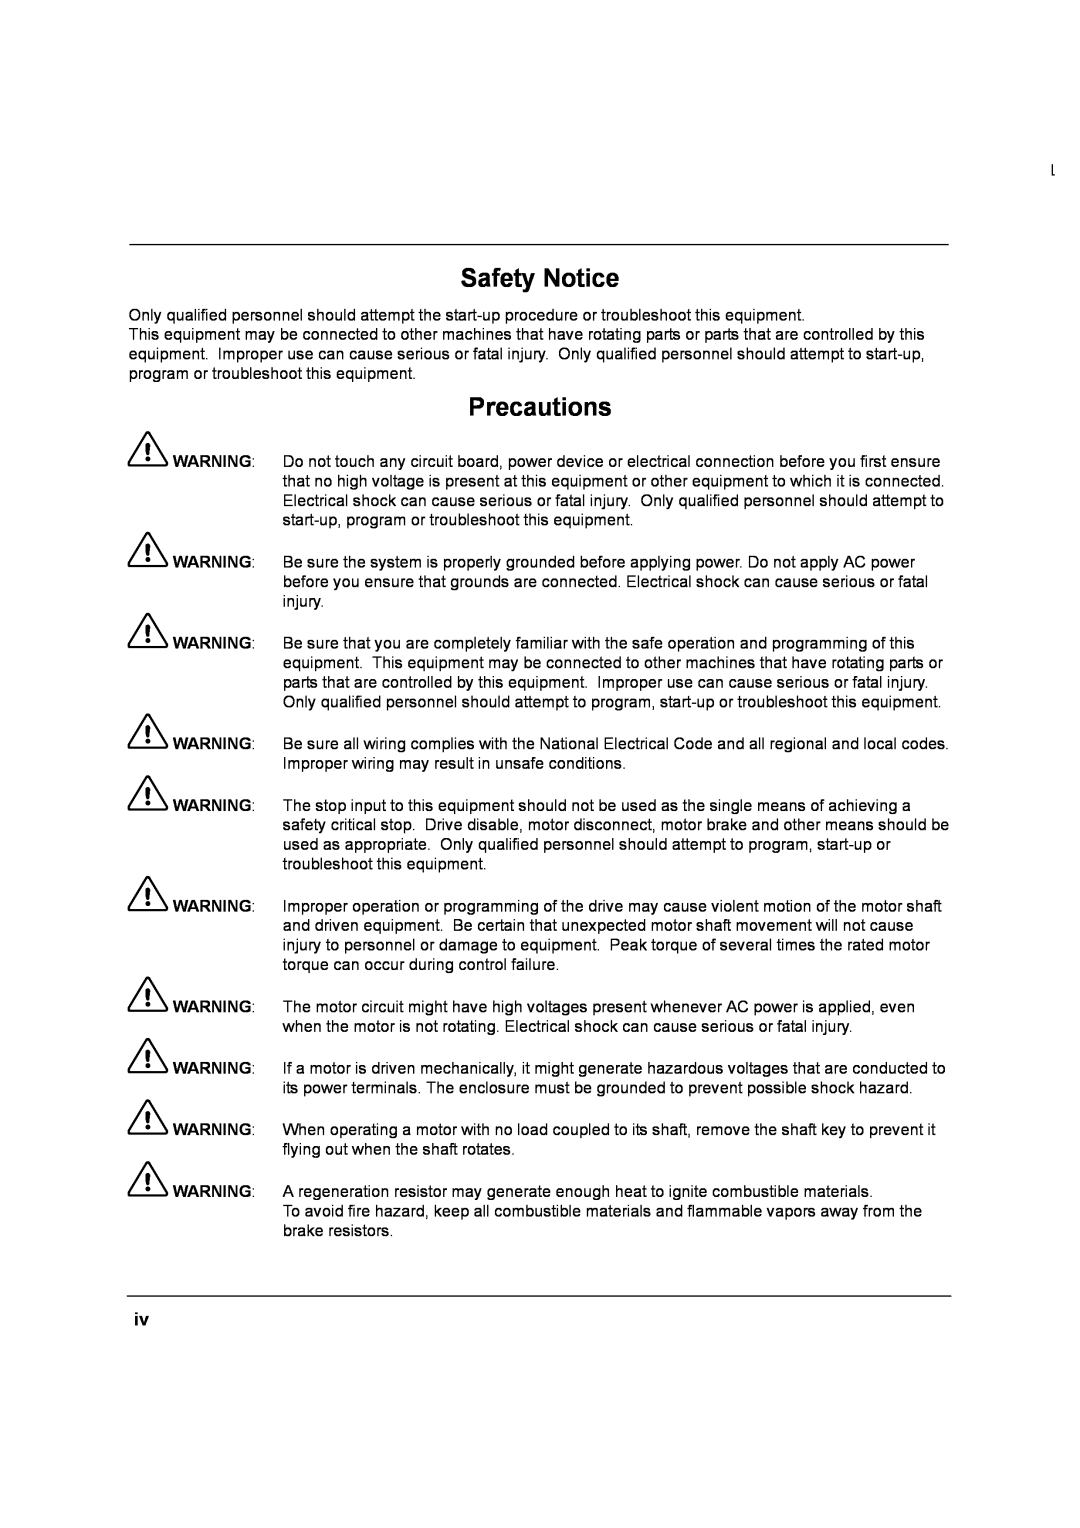 Baldor MN1274 06/2001 installation manual Safety Notice, Precautions 